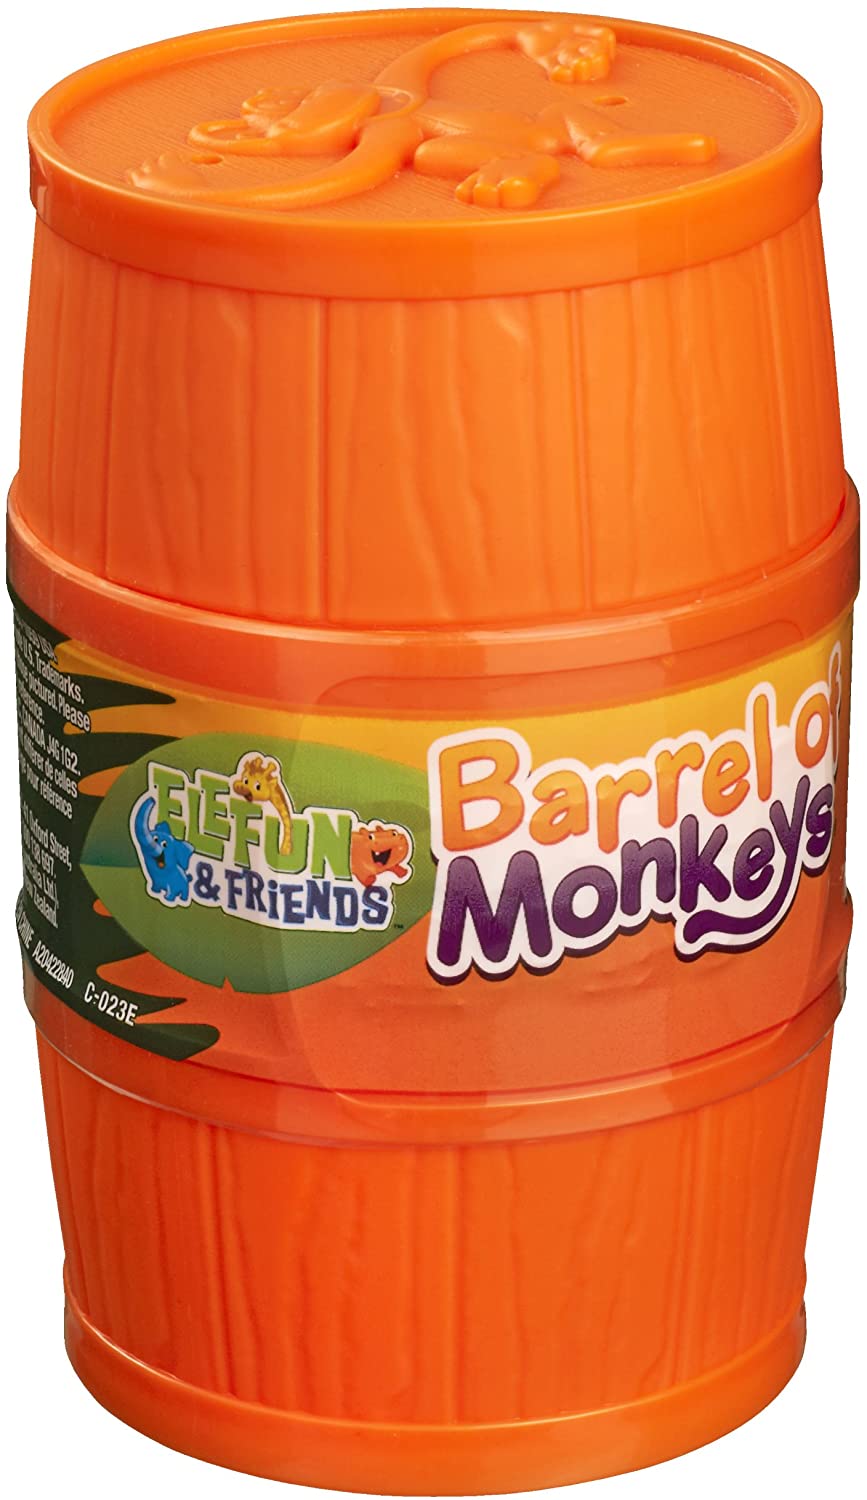 Barrel of Monkeys (assorted colors)